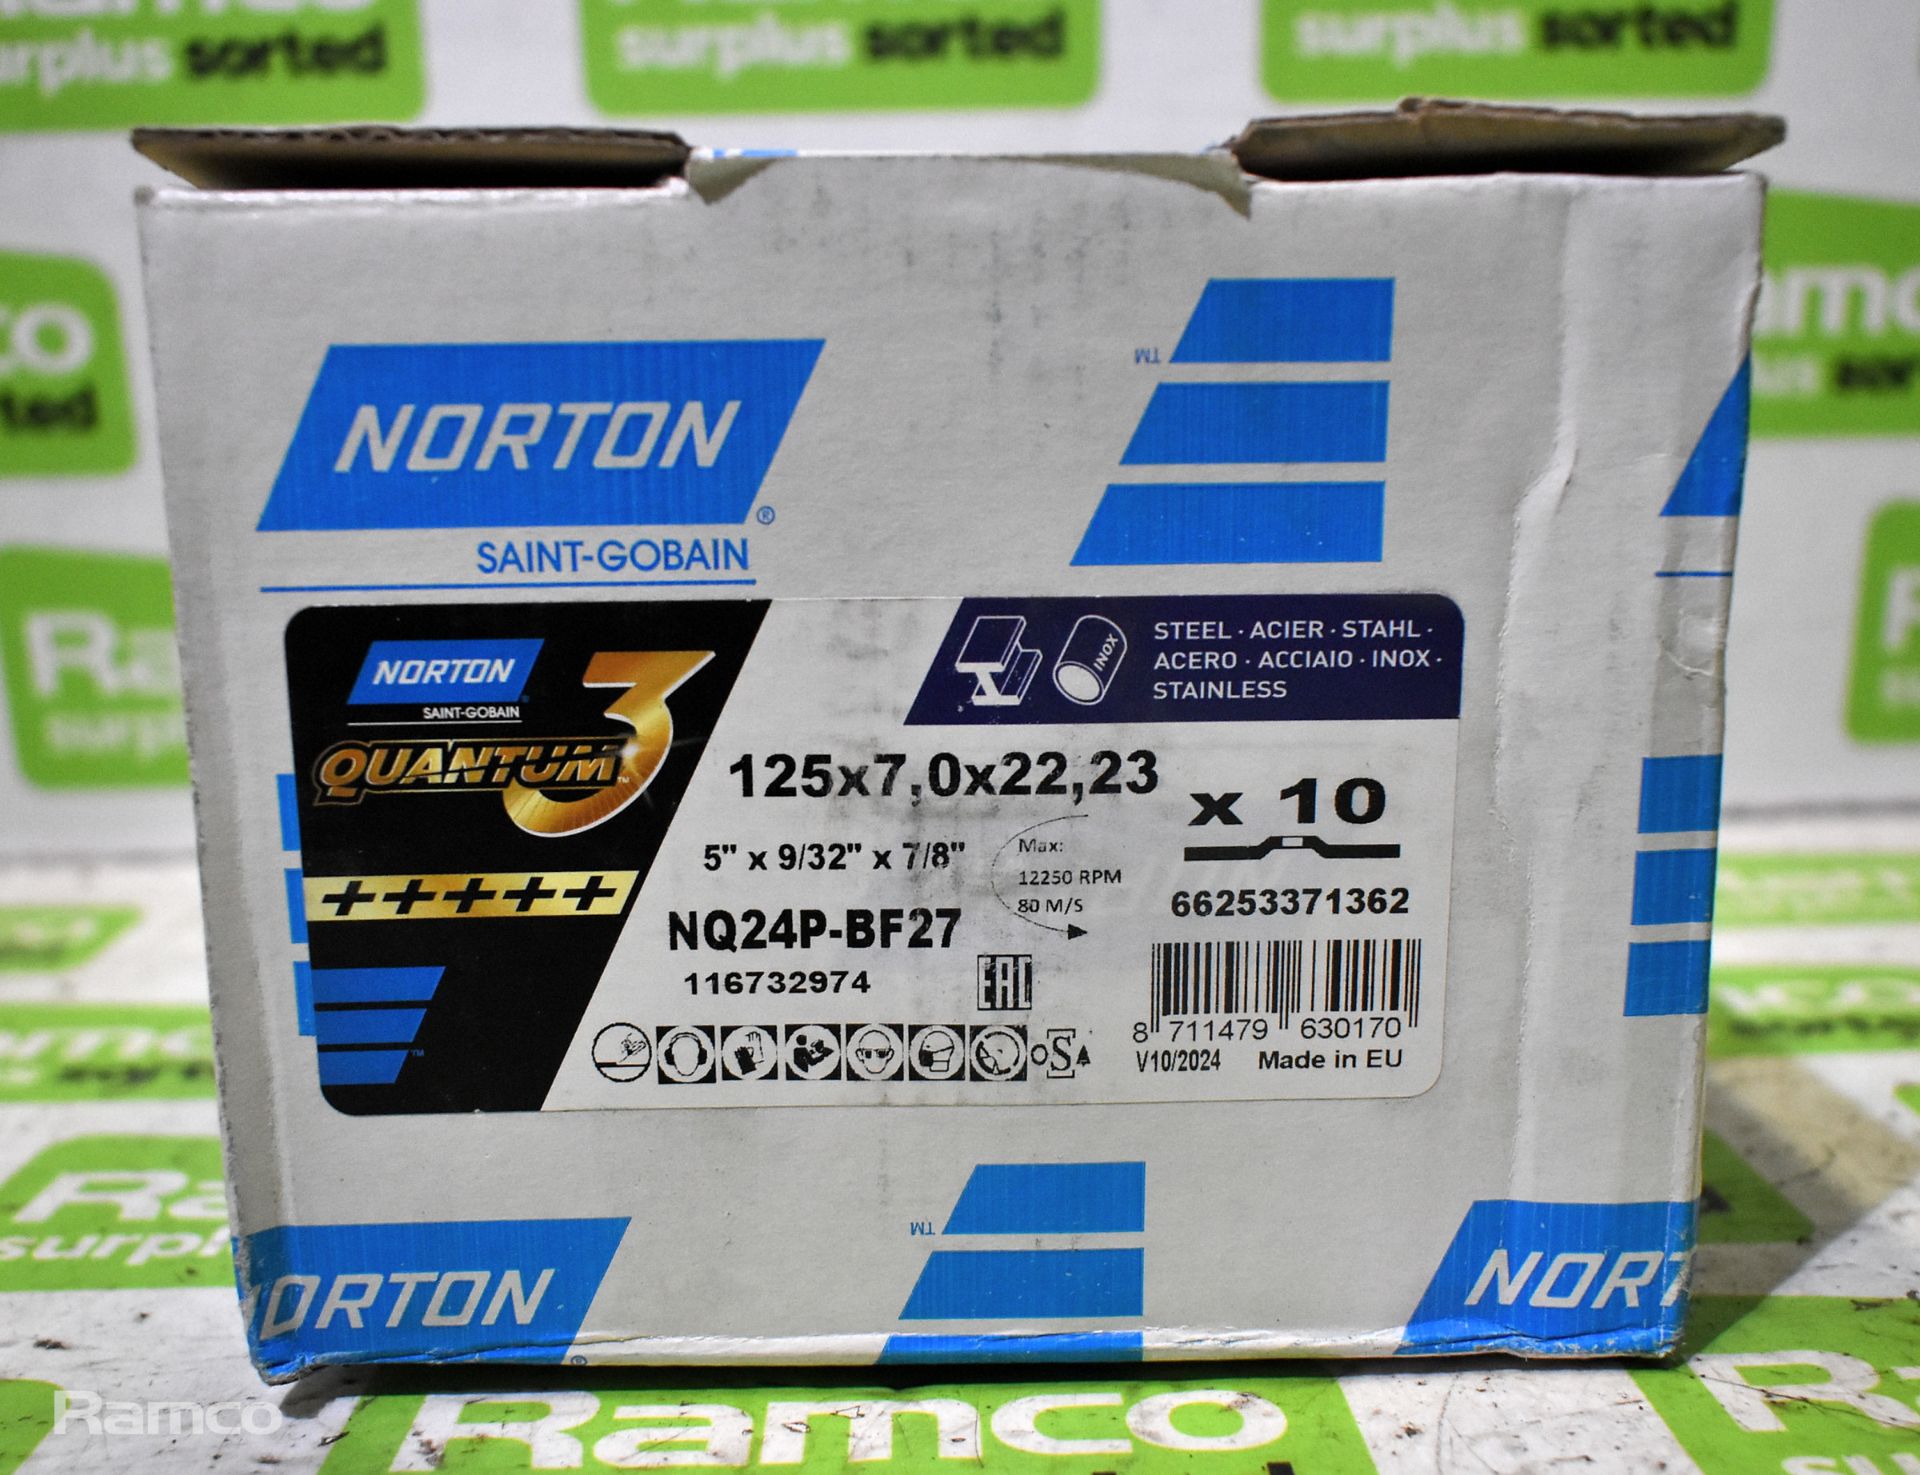 16x boxes of Norton Quantum 3 grinding wheels - 125 x 7.0 x 22.23 - approx 10 wheels per box - Bild 5 aus 6